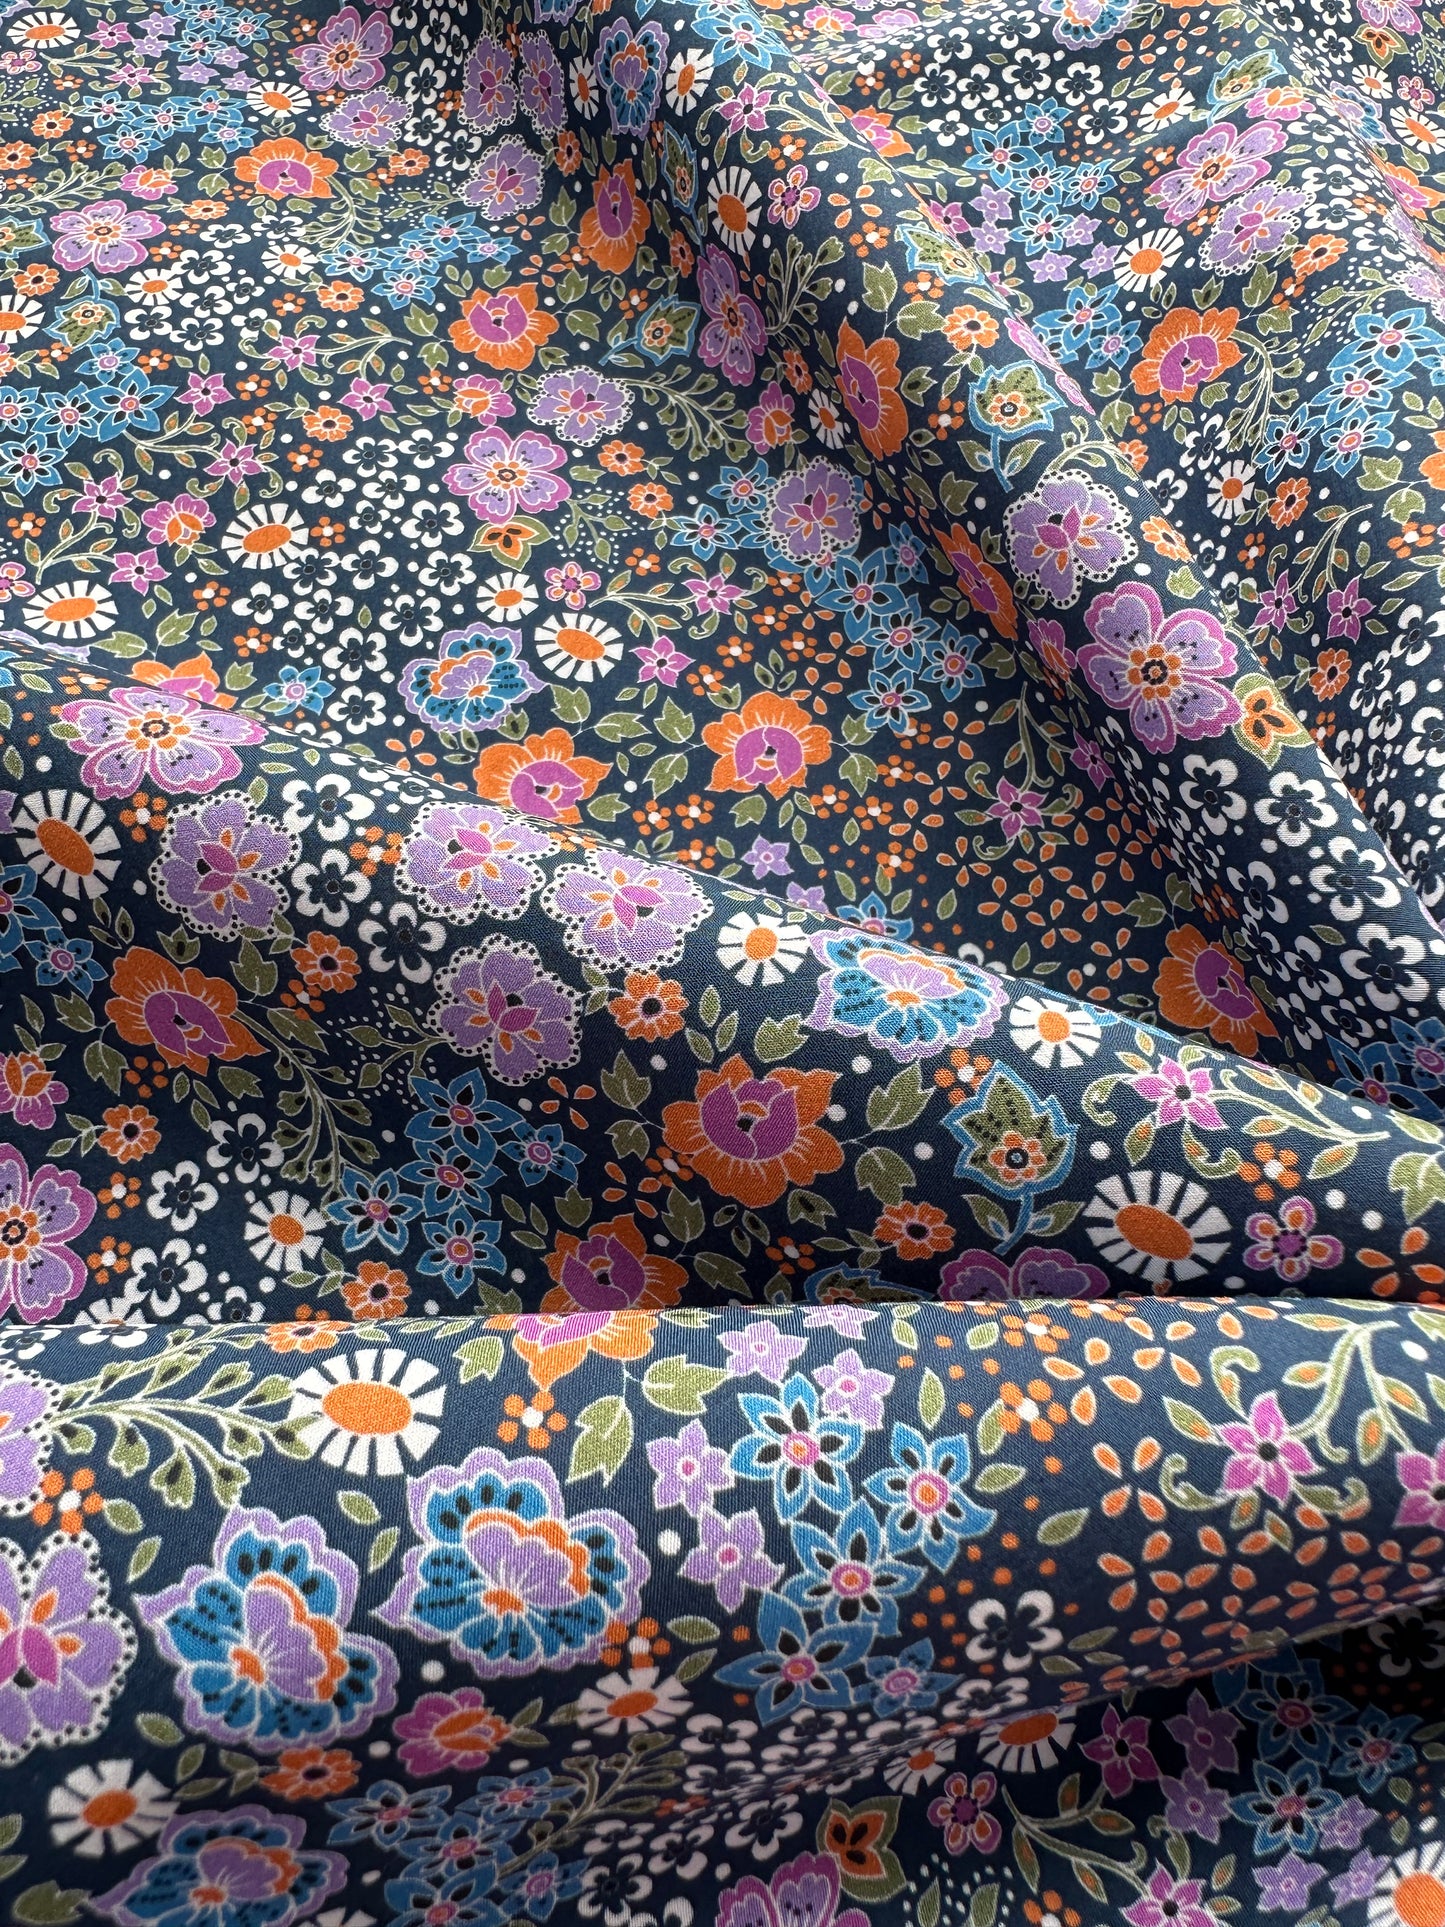 Bahar Ace Cotton Lawn Fabric in Lilac - Dashwood Studio / Fizah Malik Designs